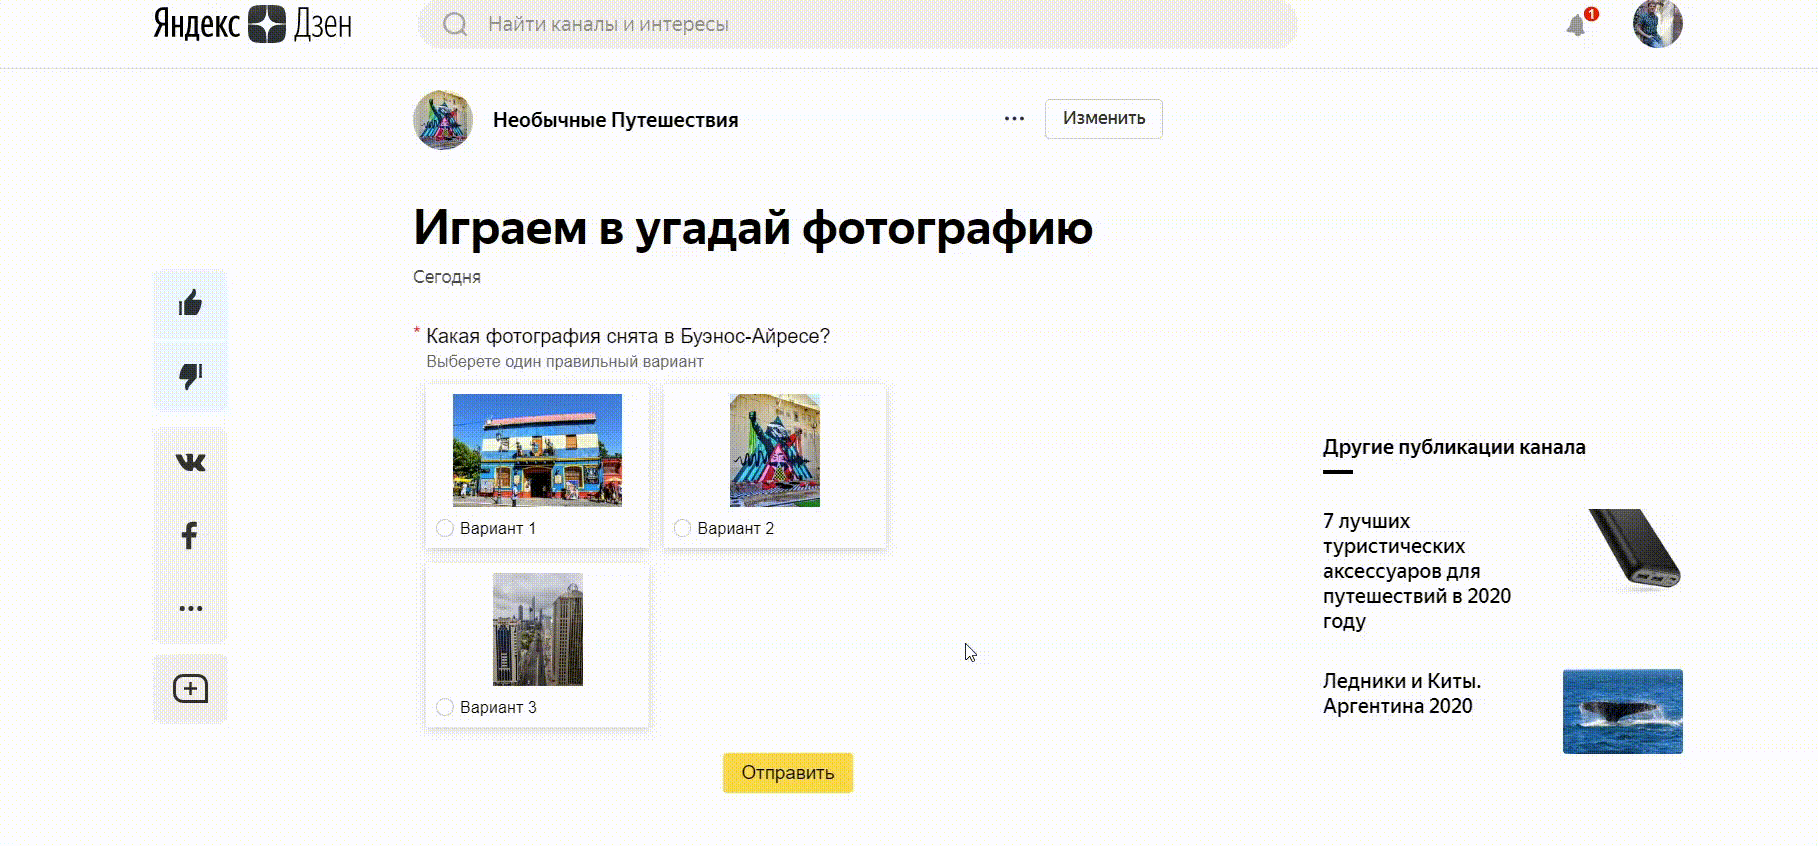 Яндекс.Дзен открыл Яндекс.Формы всем блогерам